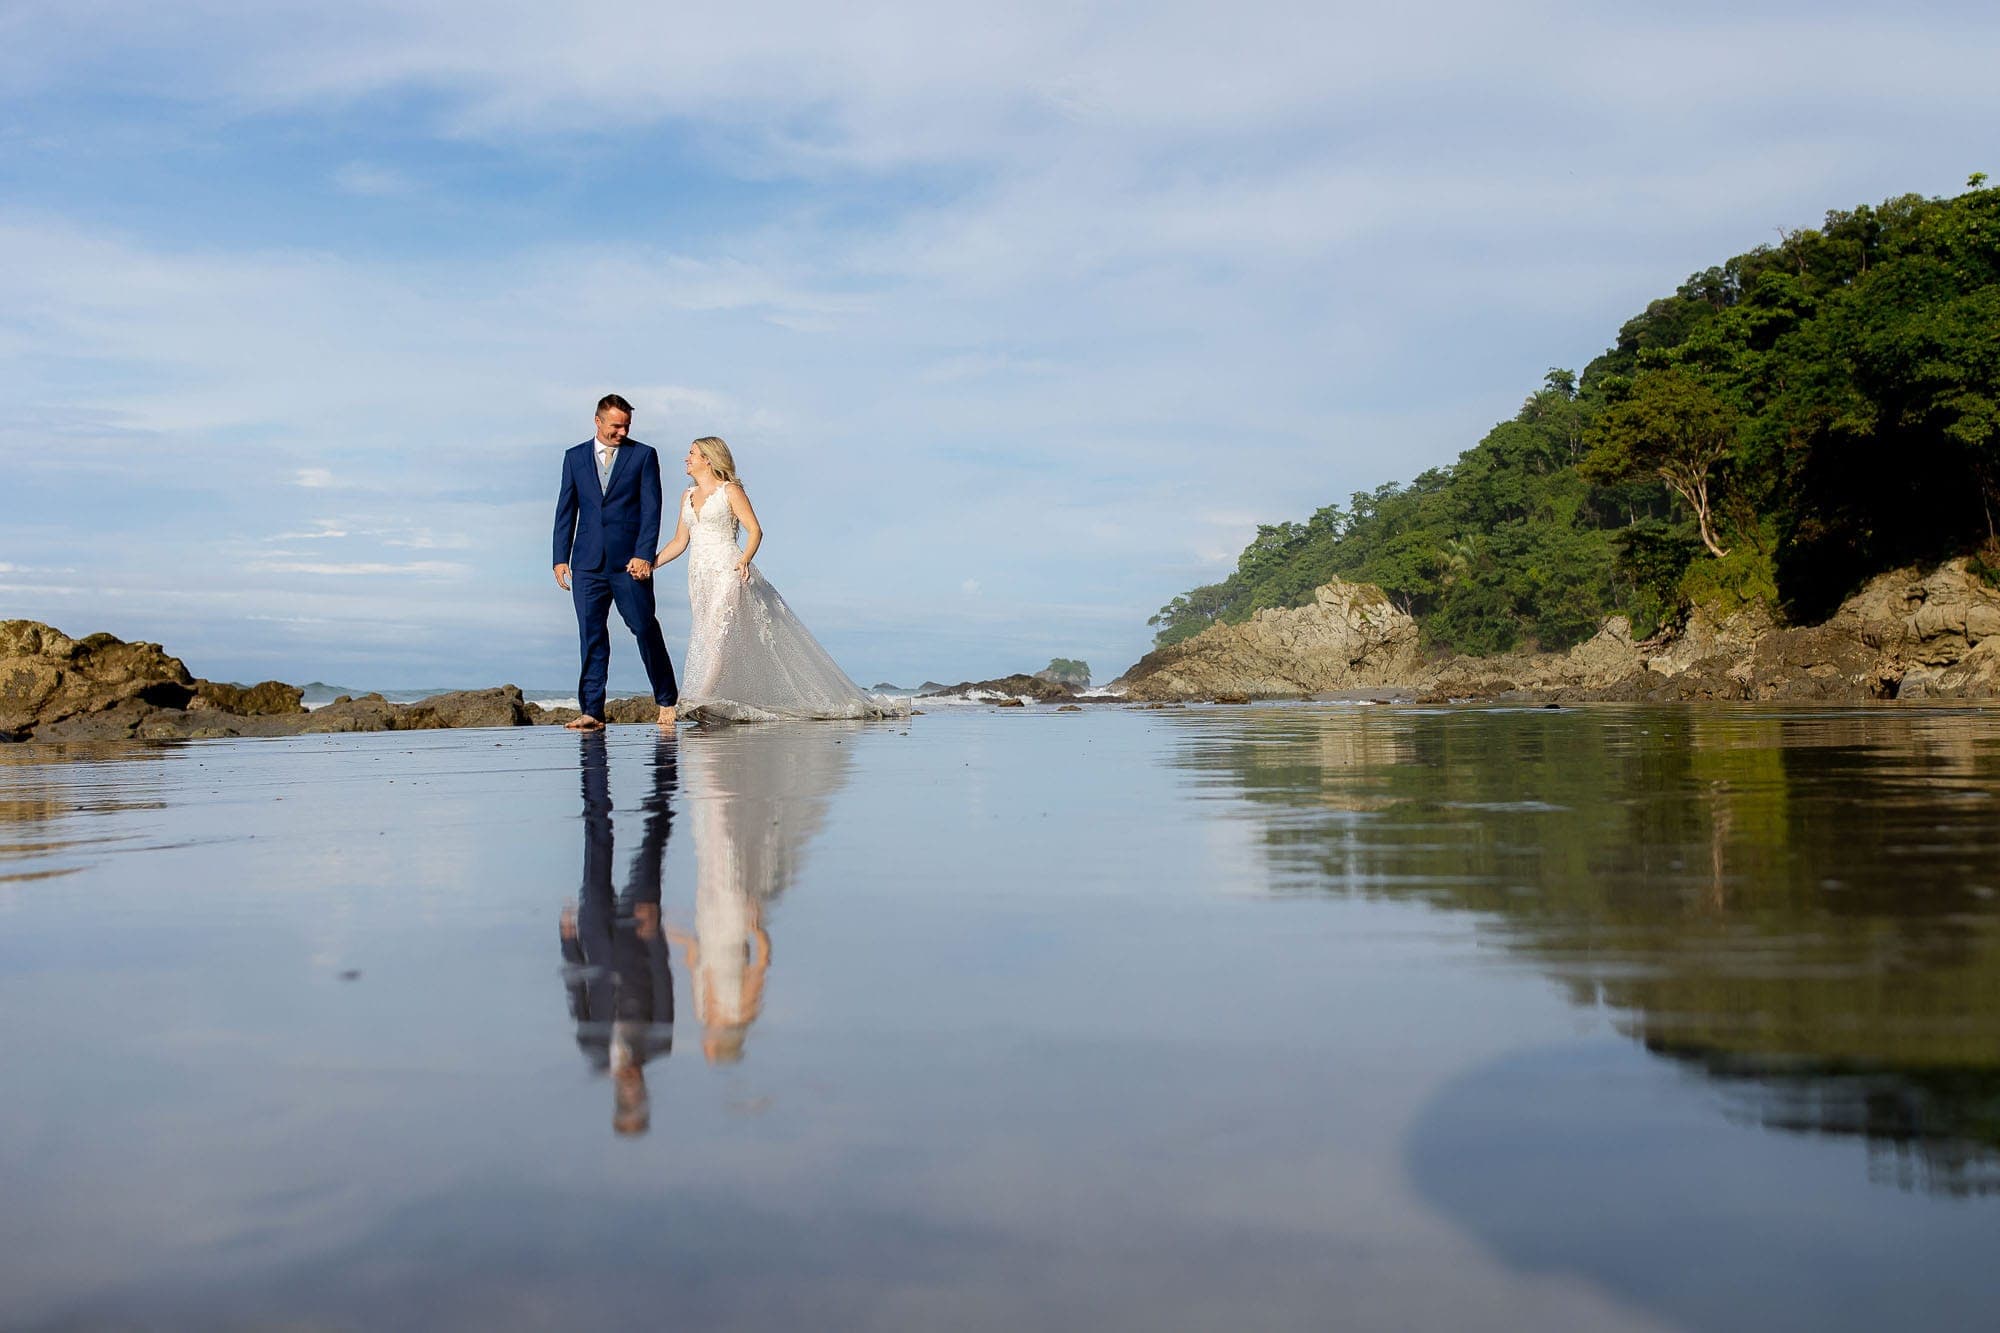 A stroll along the beach for a full Costa Rica wedding experience